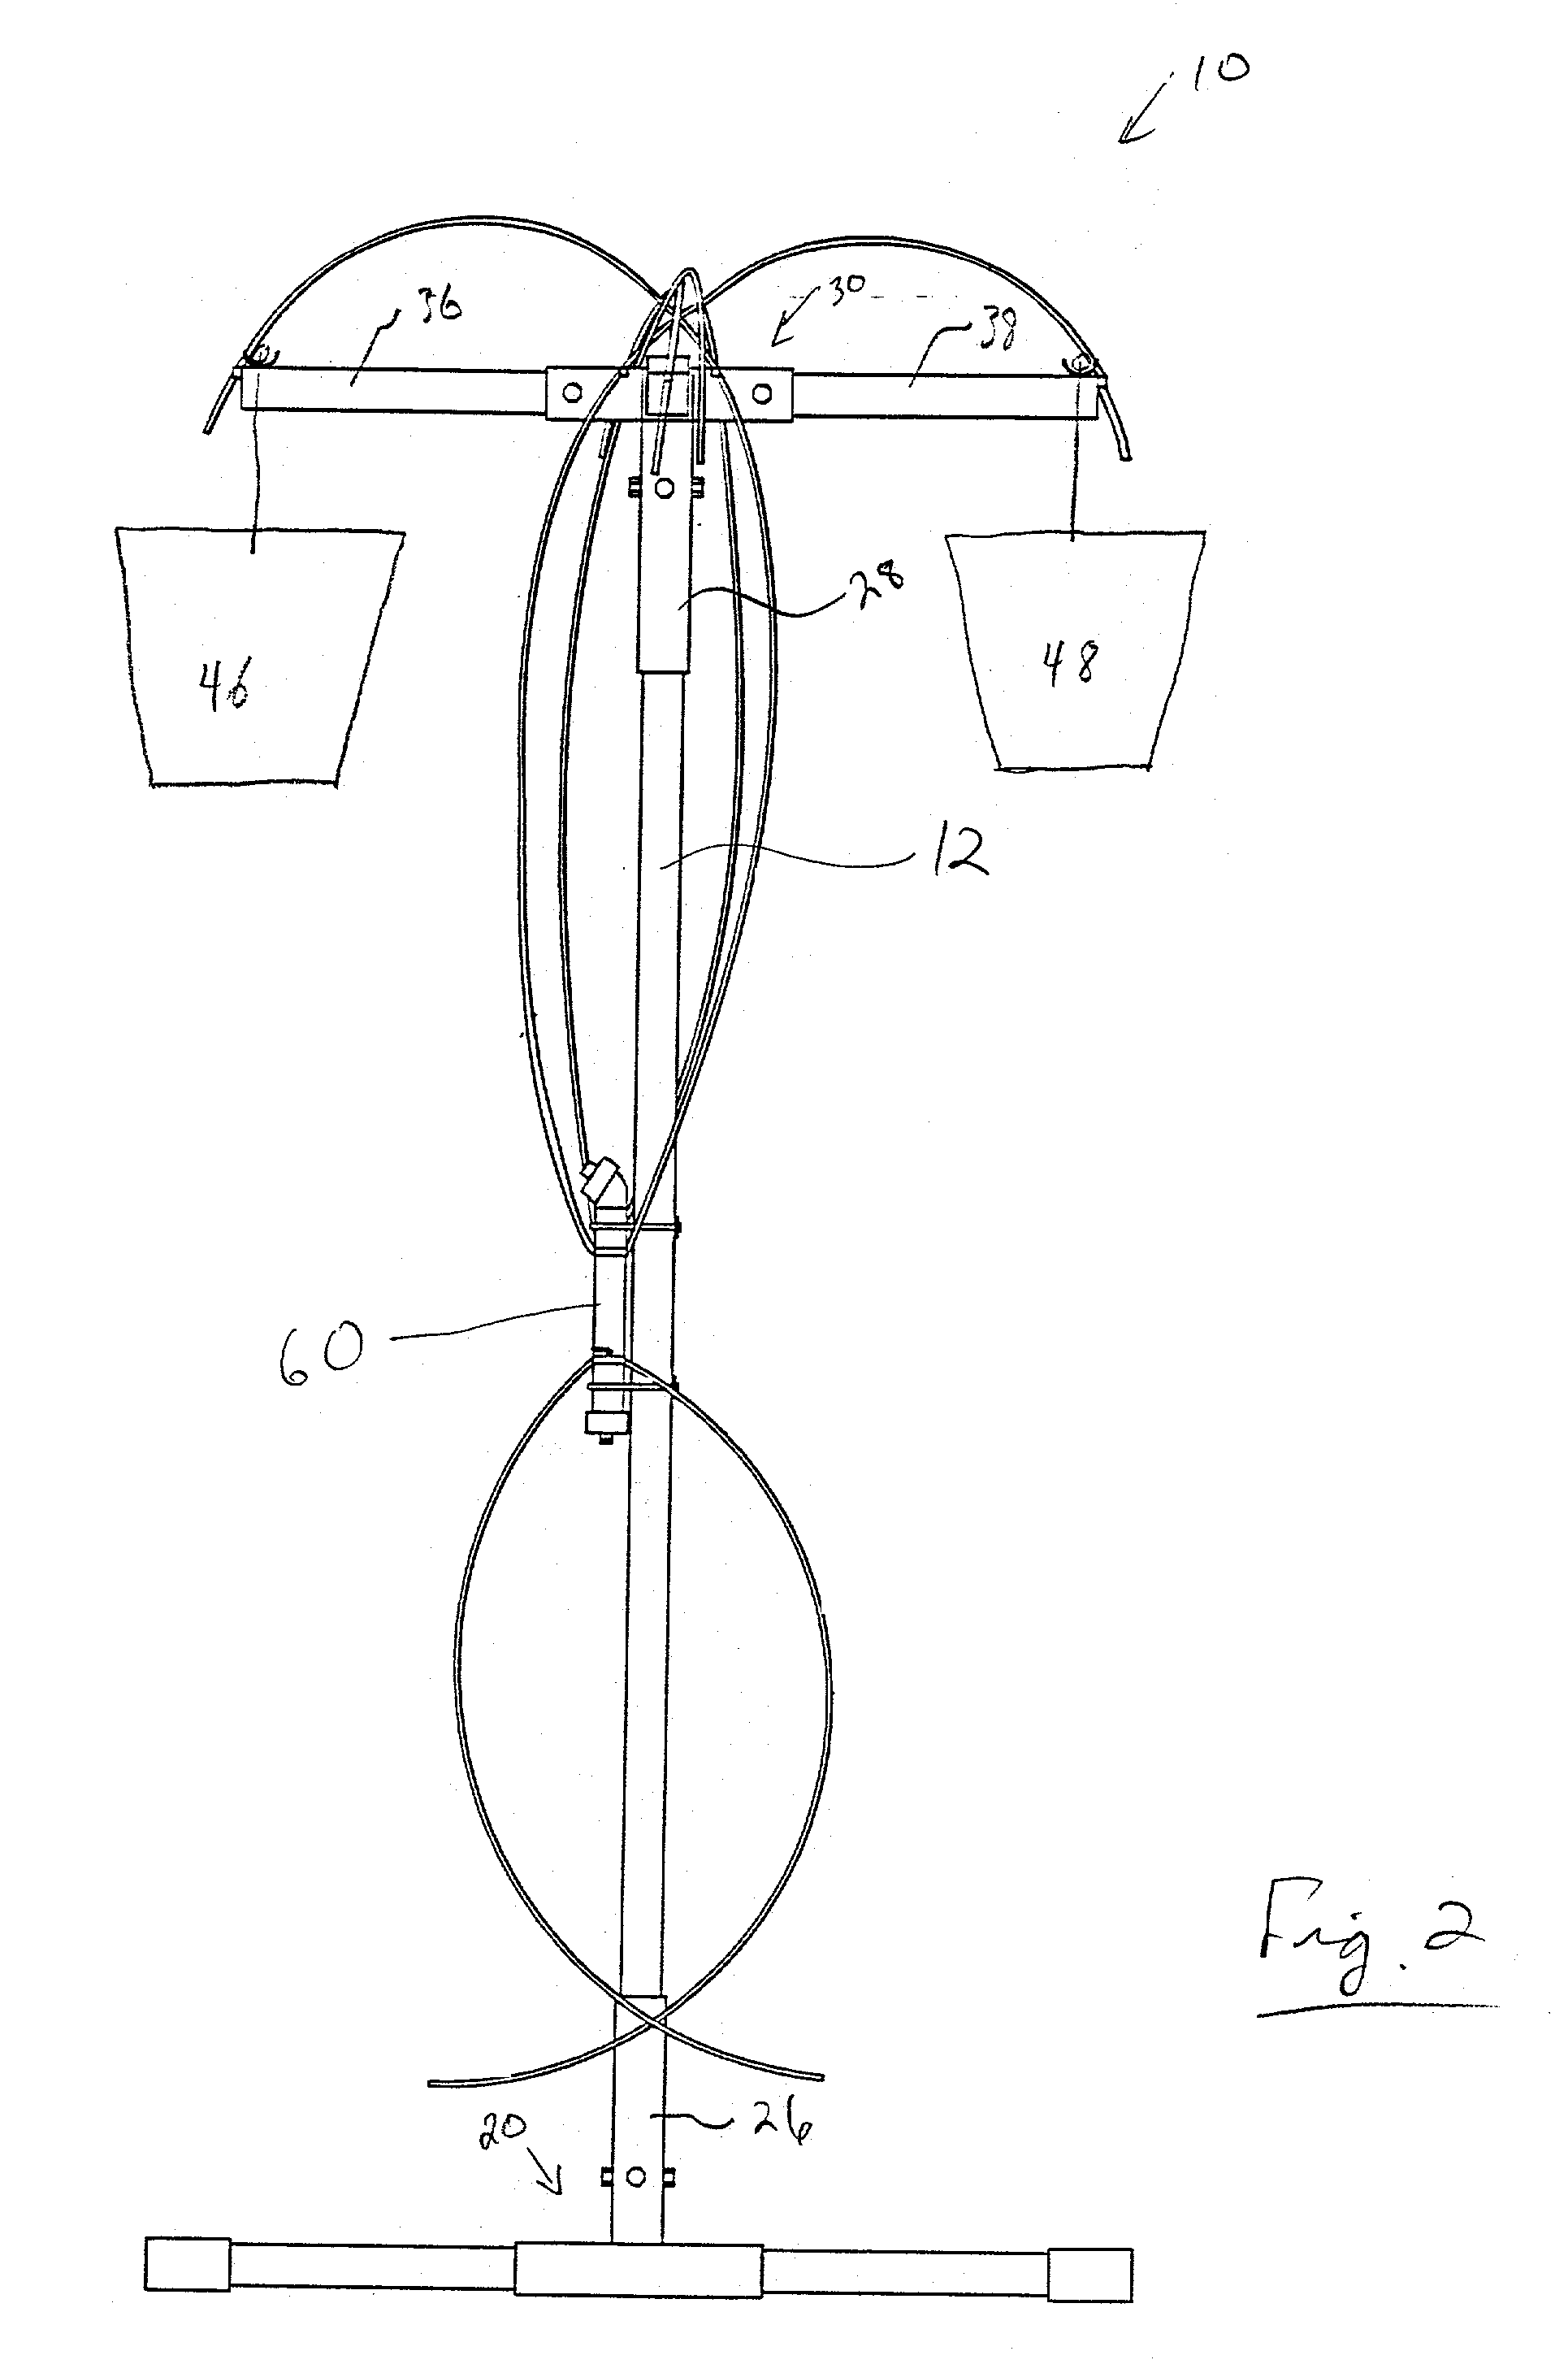 Self-watering plant holder